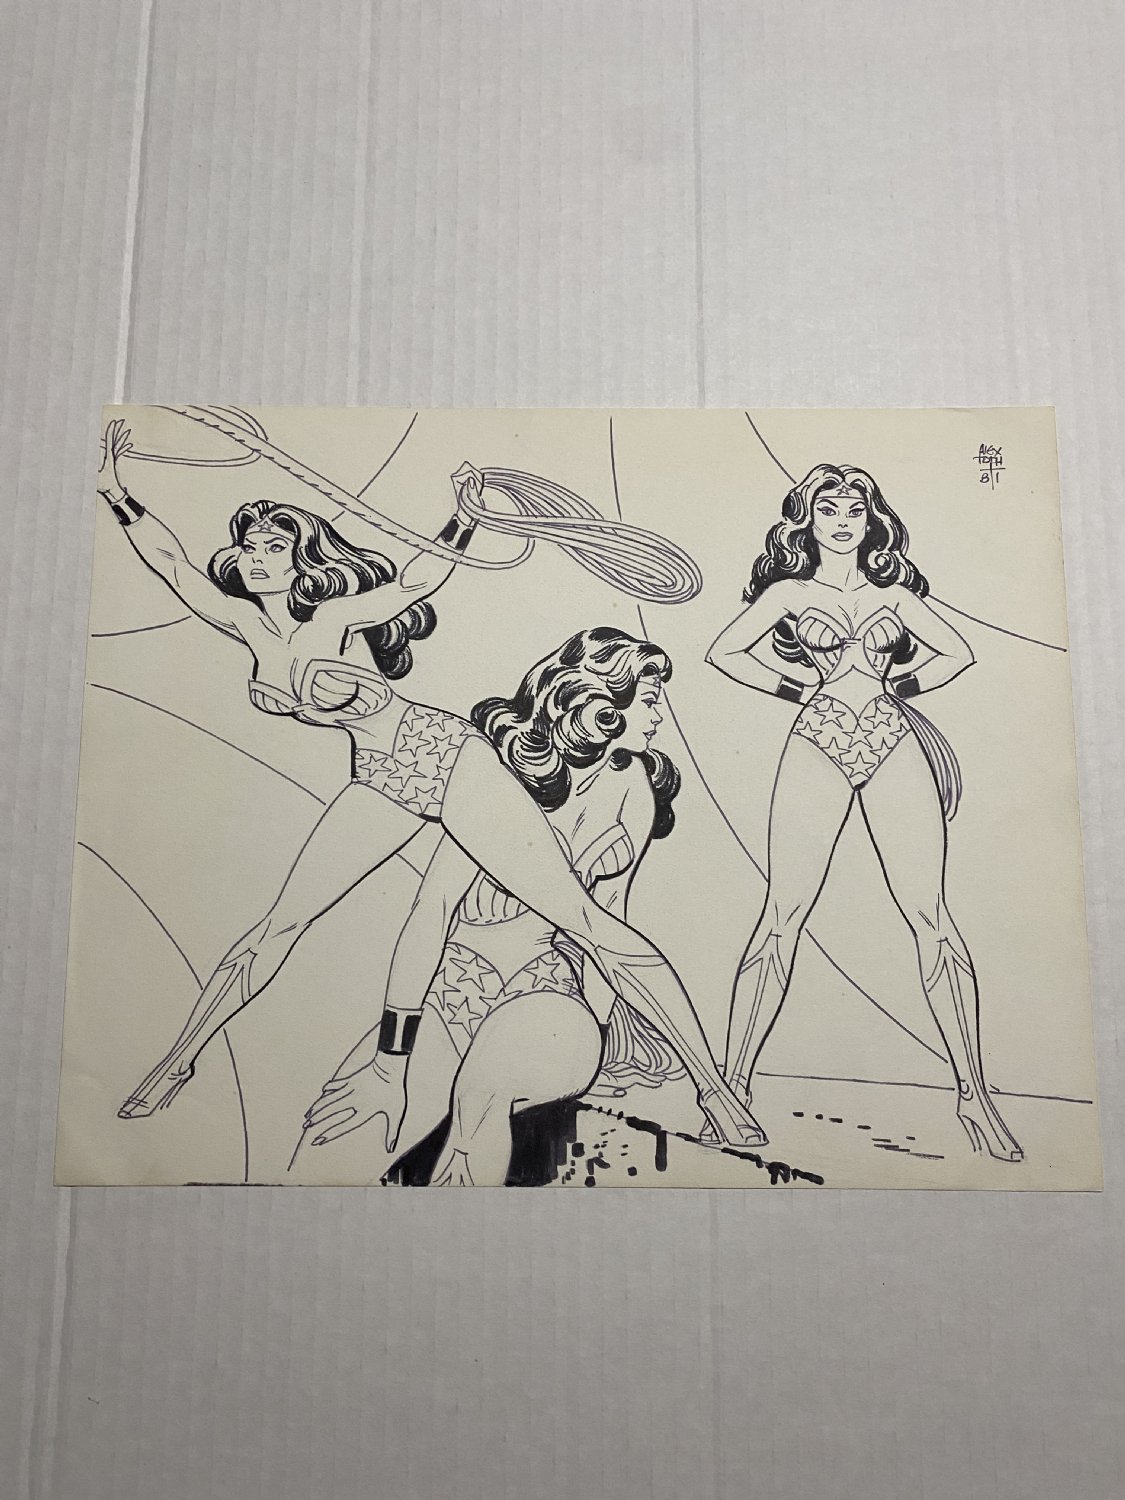  Toth Underoos concept art Wonder Woman by Alex Toth